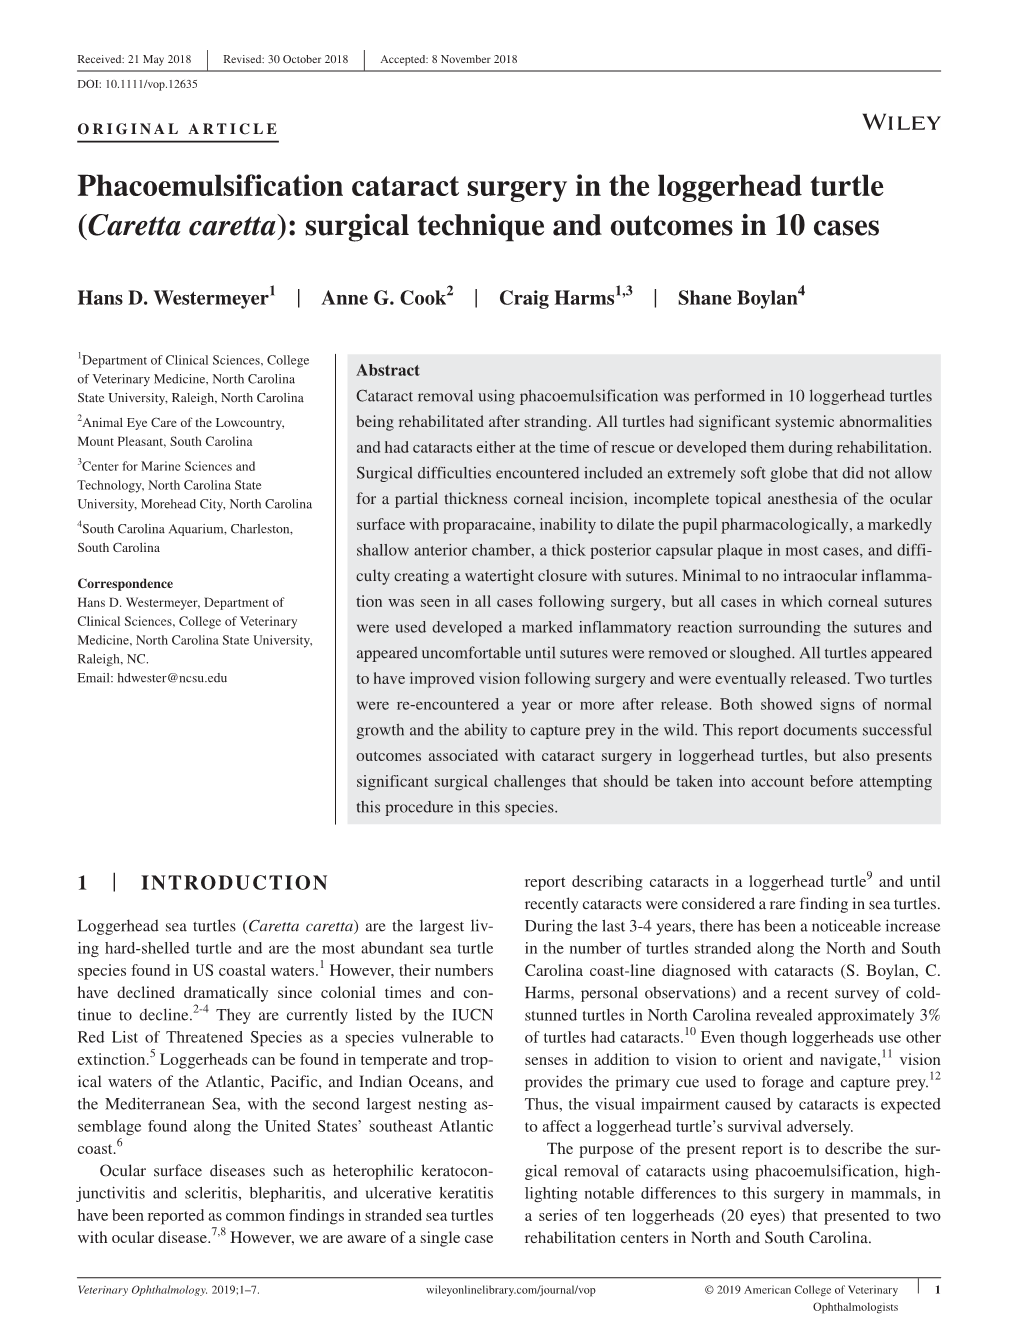 Phacoemulsification Cataract Surgery in the Loggerhead Turtle (Caretta Caretta): Surgical Technique and Outcomes in 10 Cases